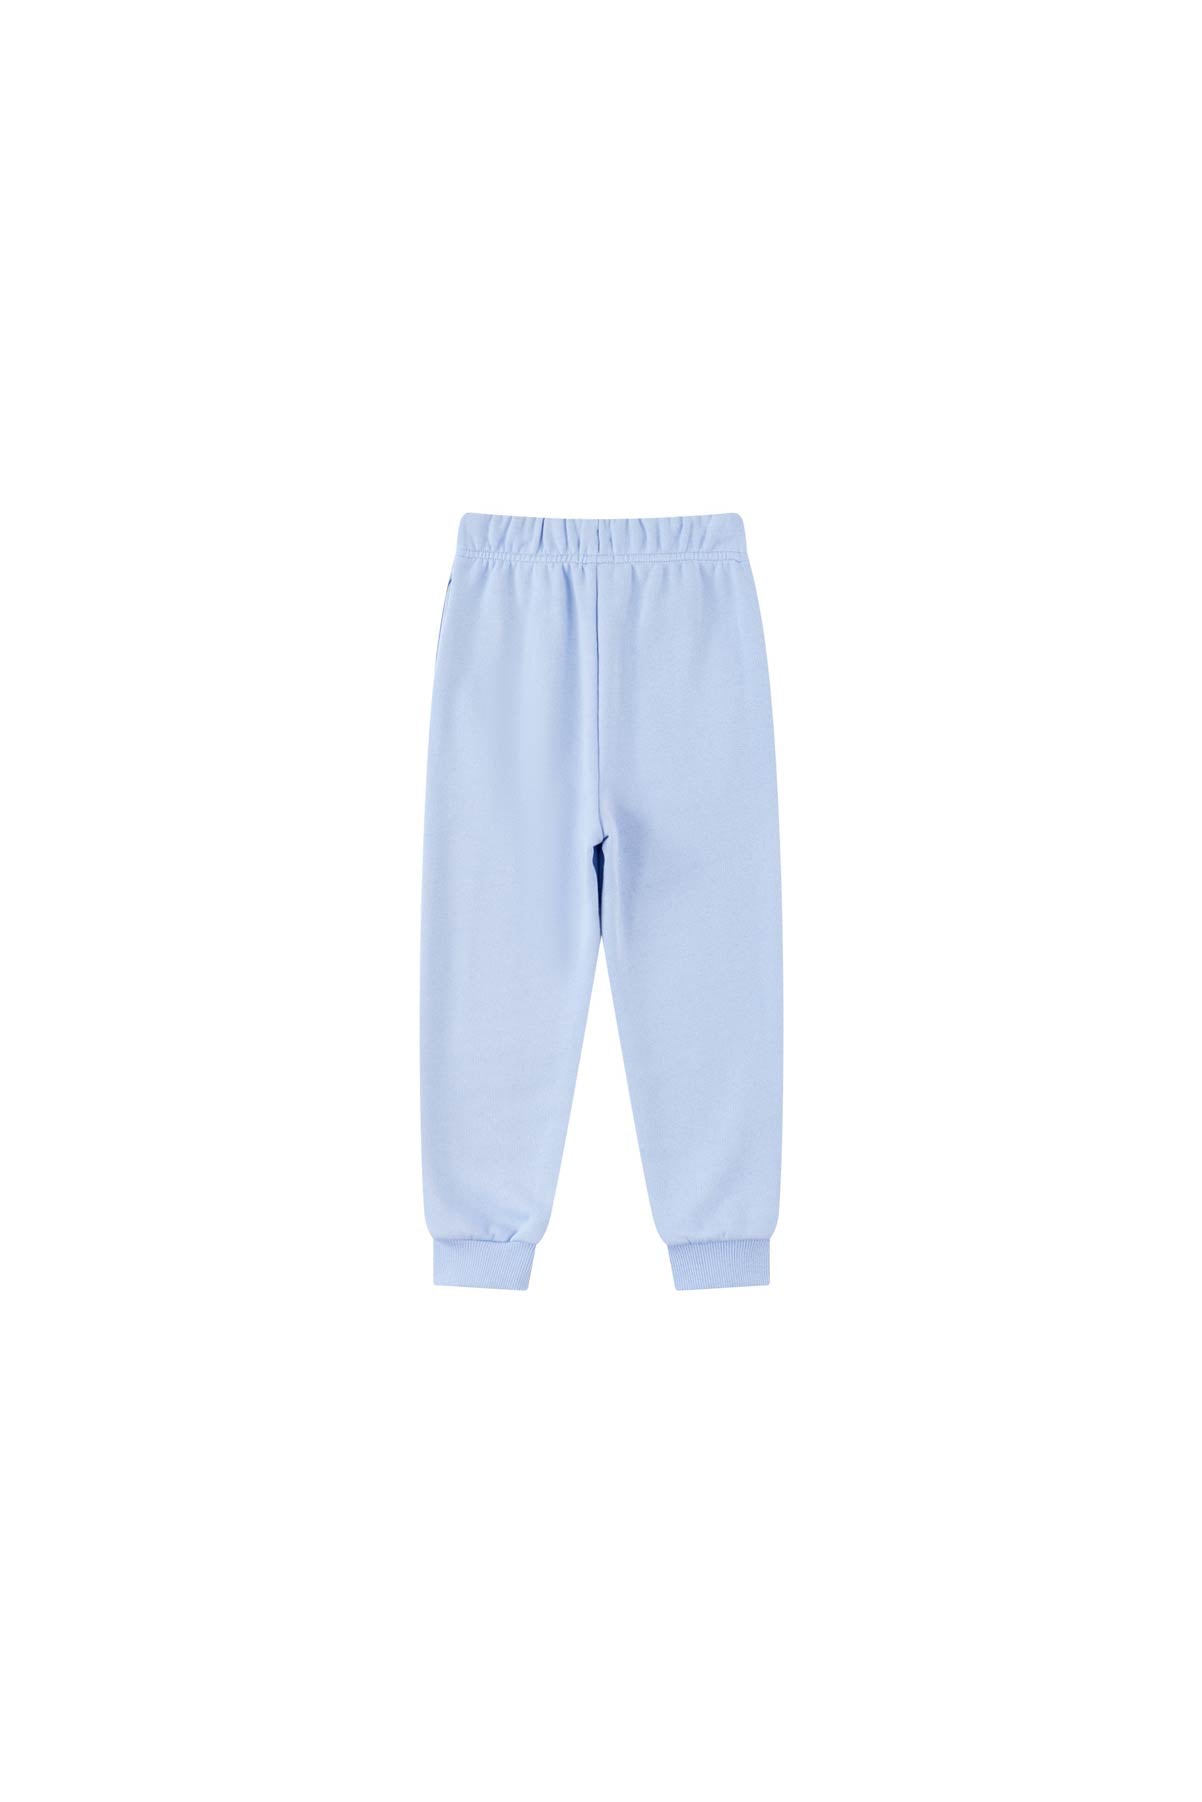 Toddler Organic Sweatpant-Serenity Blue